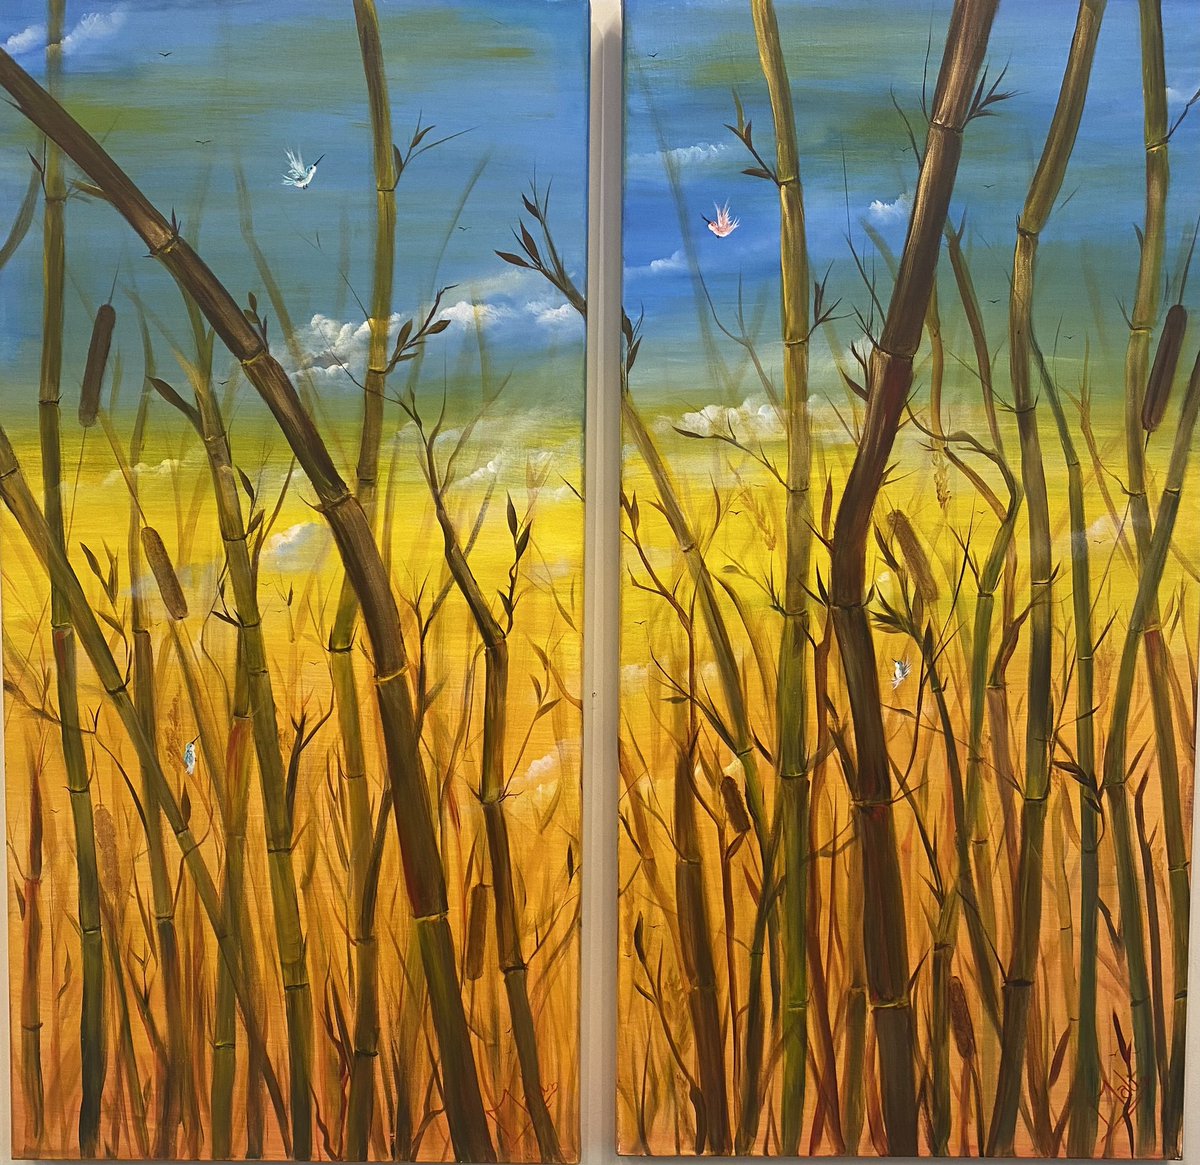 Bamboo Farm , Two-panel Set
#acrylicpaintings 
#artist Mali Mirzaei
Available at 1026 Oak Street, Suite 102 Clayton, Ca.
jorfineartgallery.com

#art #giftideas #jorfineartgallery #claytonca #bayarea #eastbayart #mothersdaygiftideas